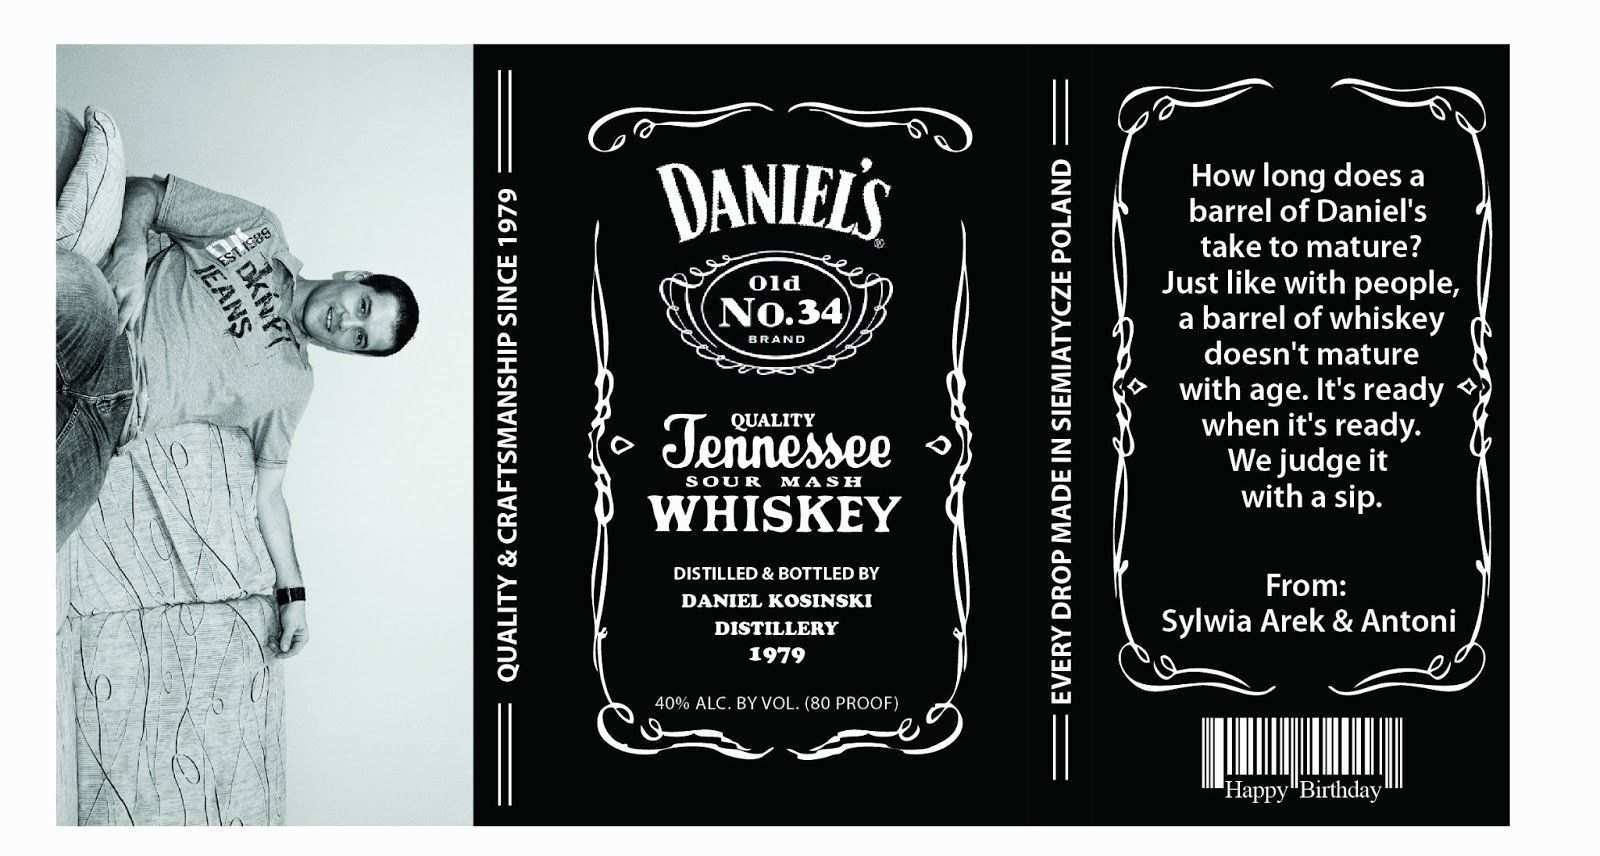 Free Jack Daniels Label Template Luxury 13 Einzigartig Jack Daniels Etikett Vorlage Robert Cv Label Templates Jack Daniels Label Printable Label Templates